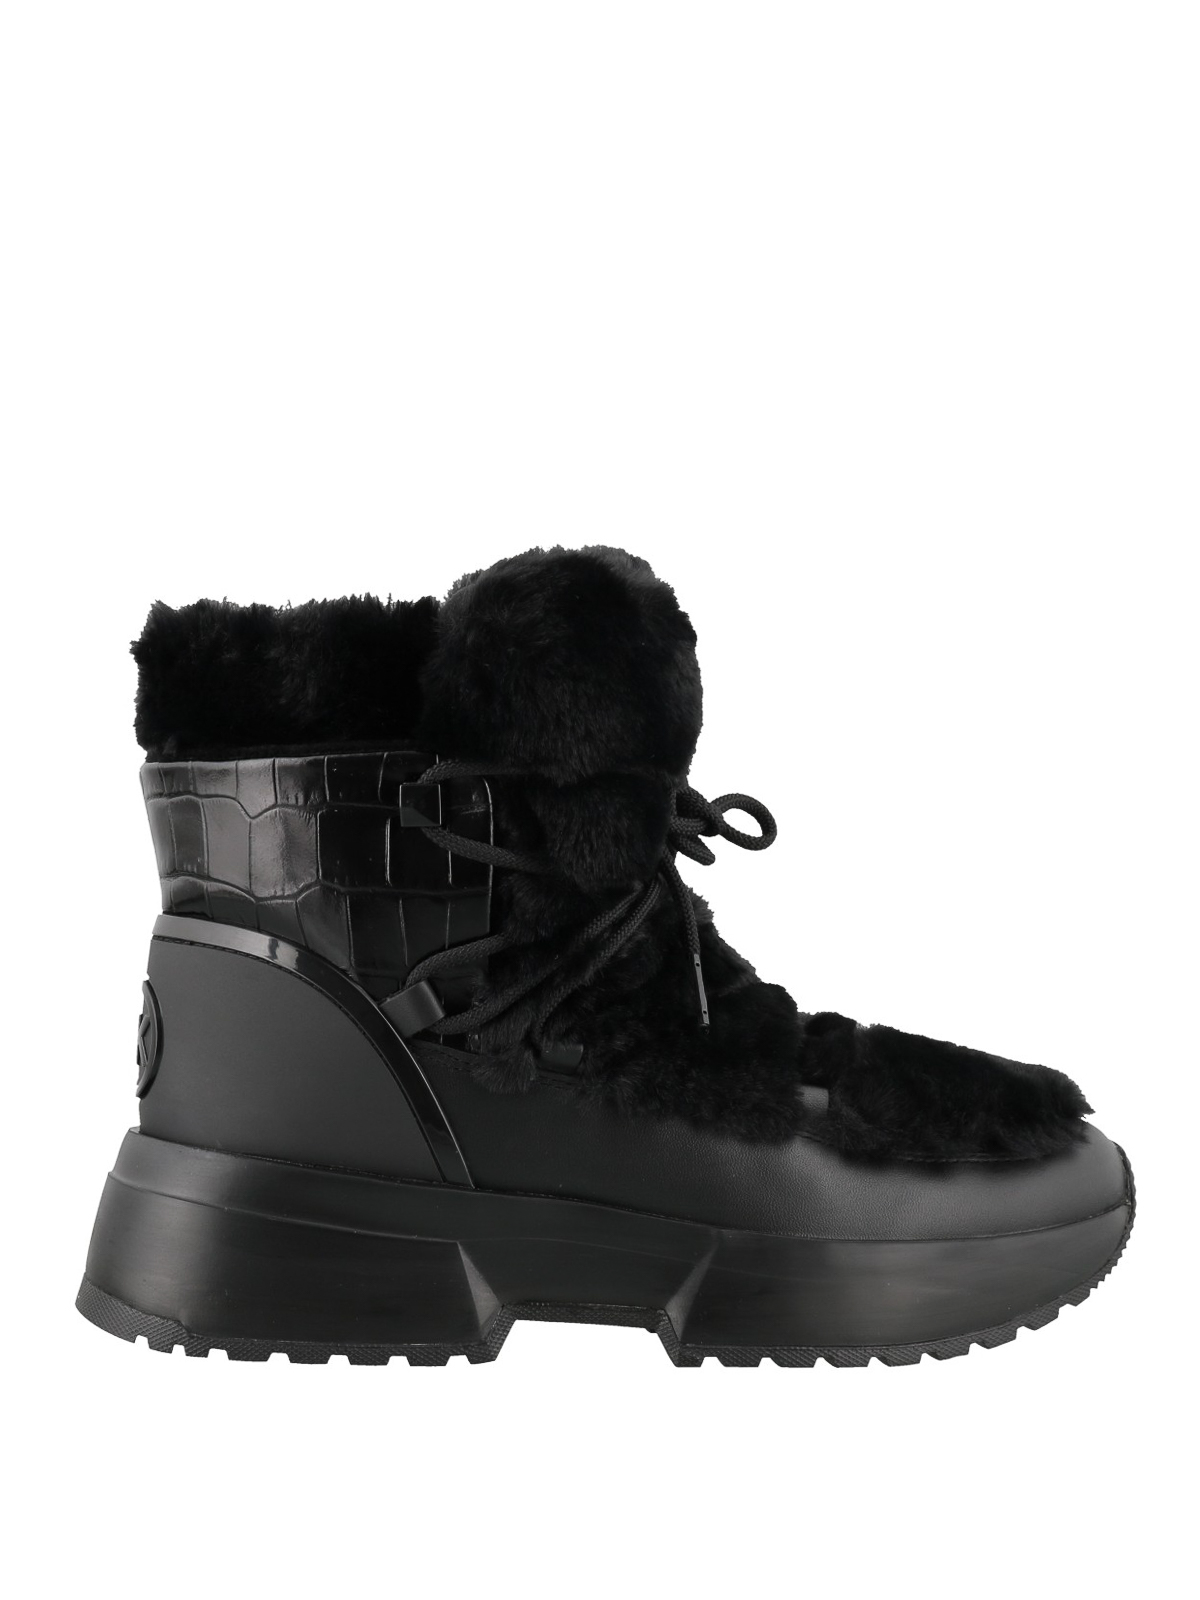 Total 60+ imagen michael kors black fur boots - Abzlocal.mx